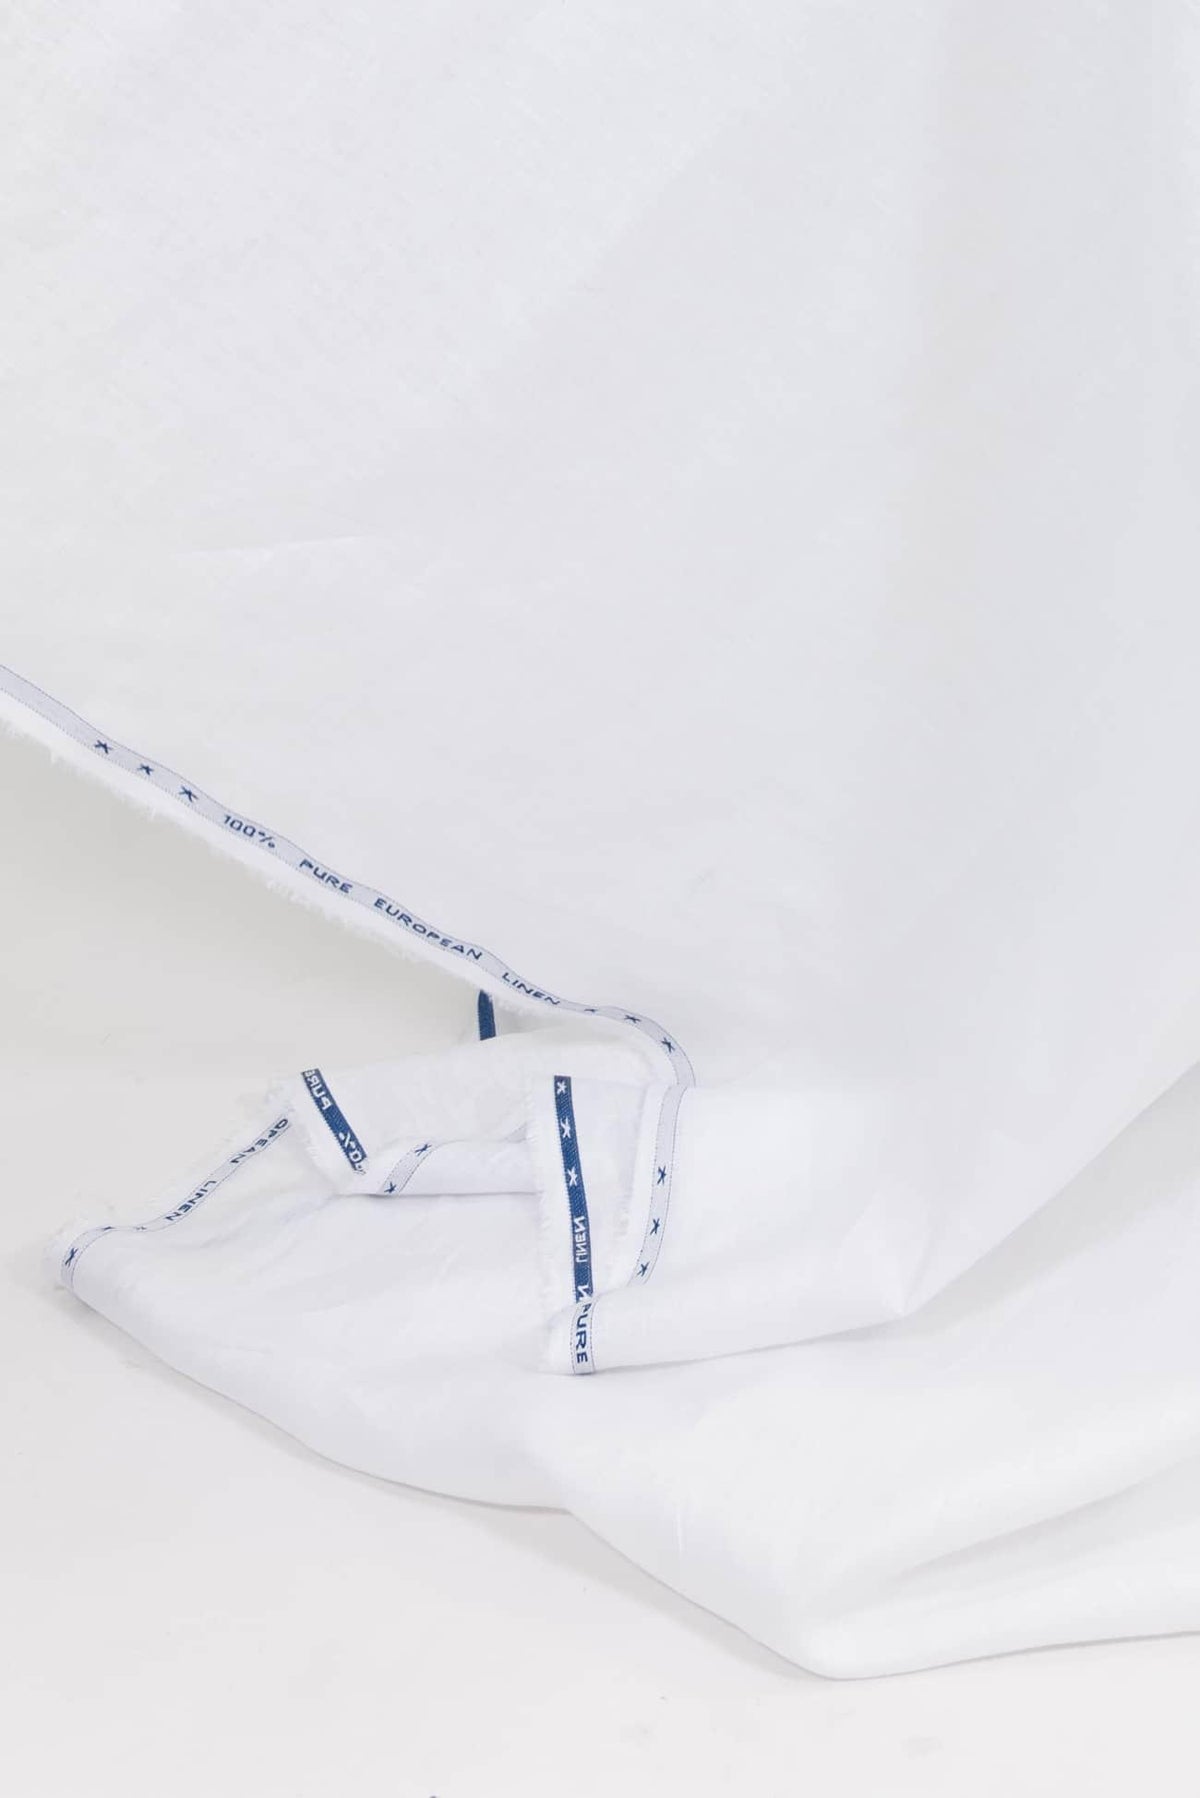 Artic White Linen Woven - Marcy Tilton Fabrics